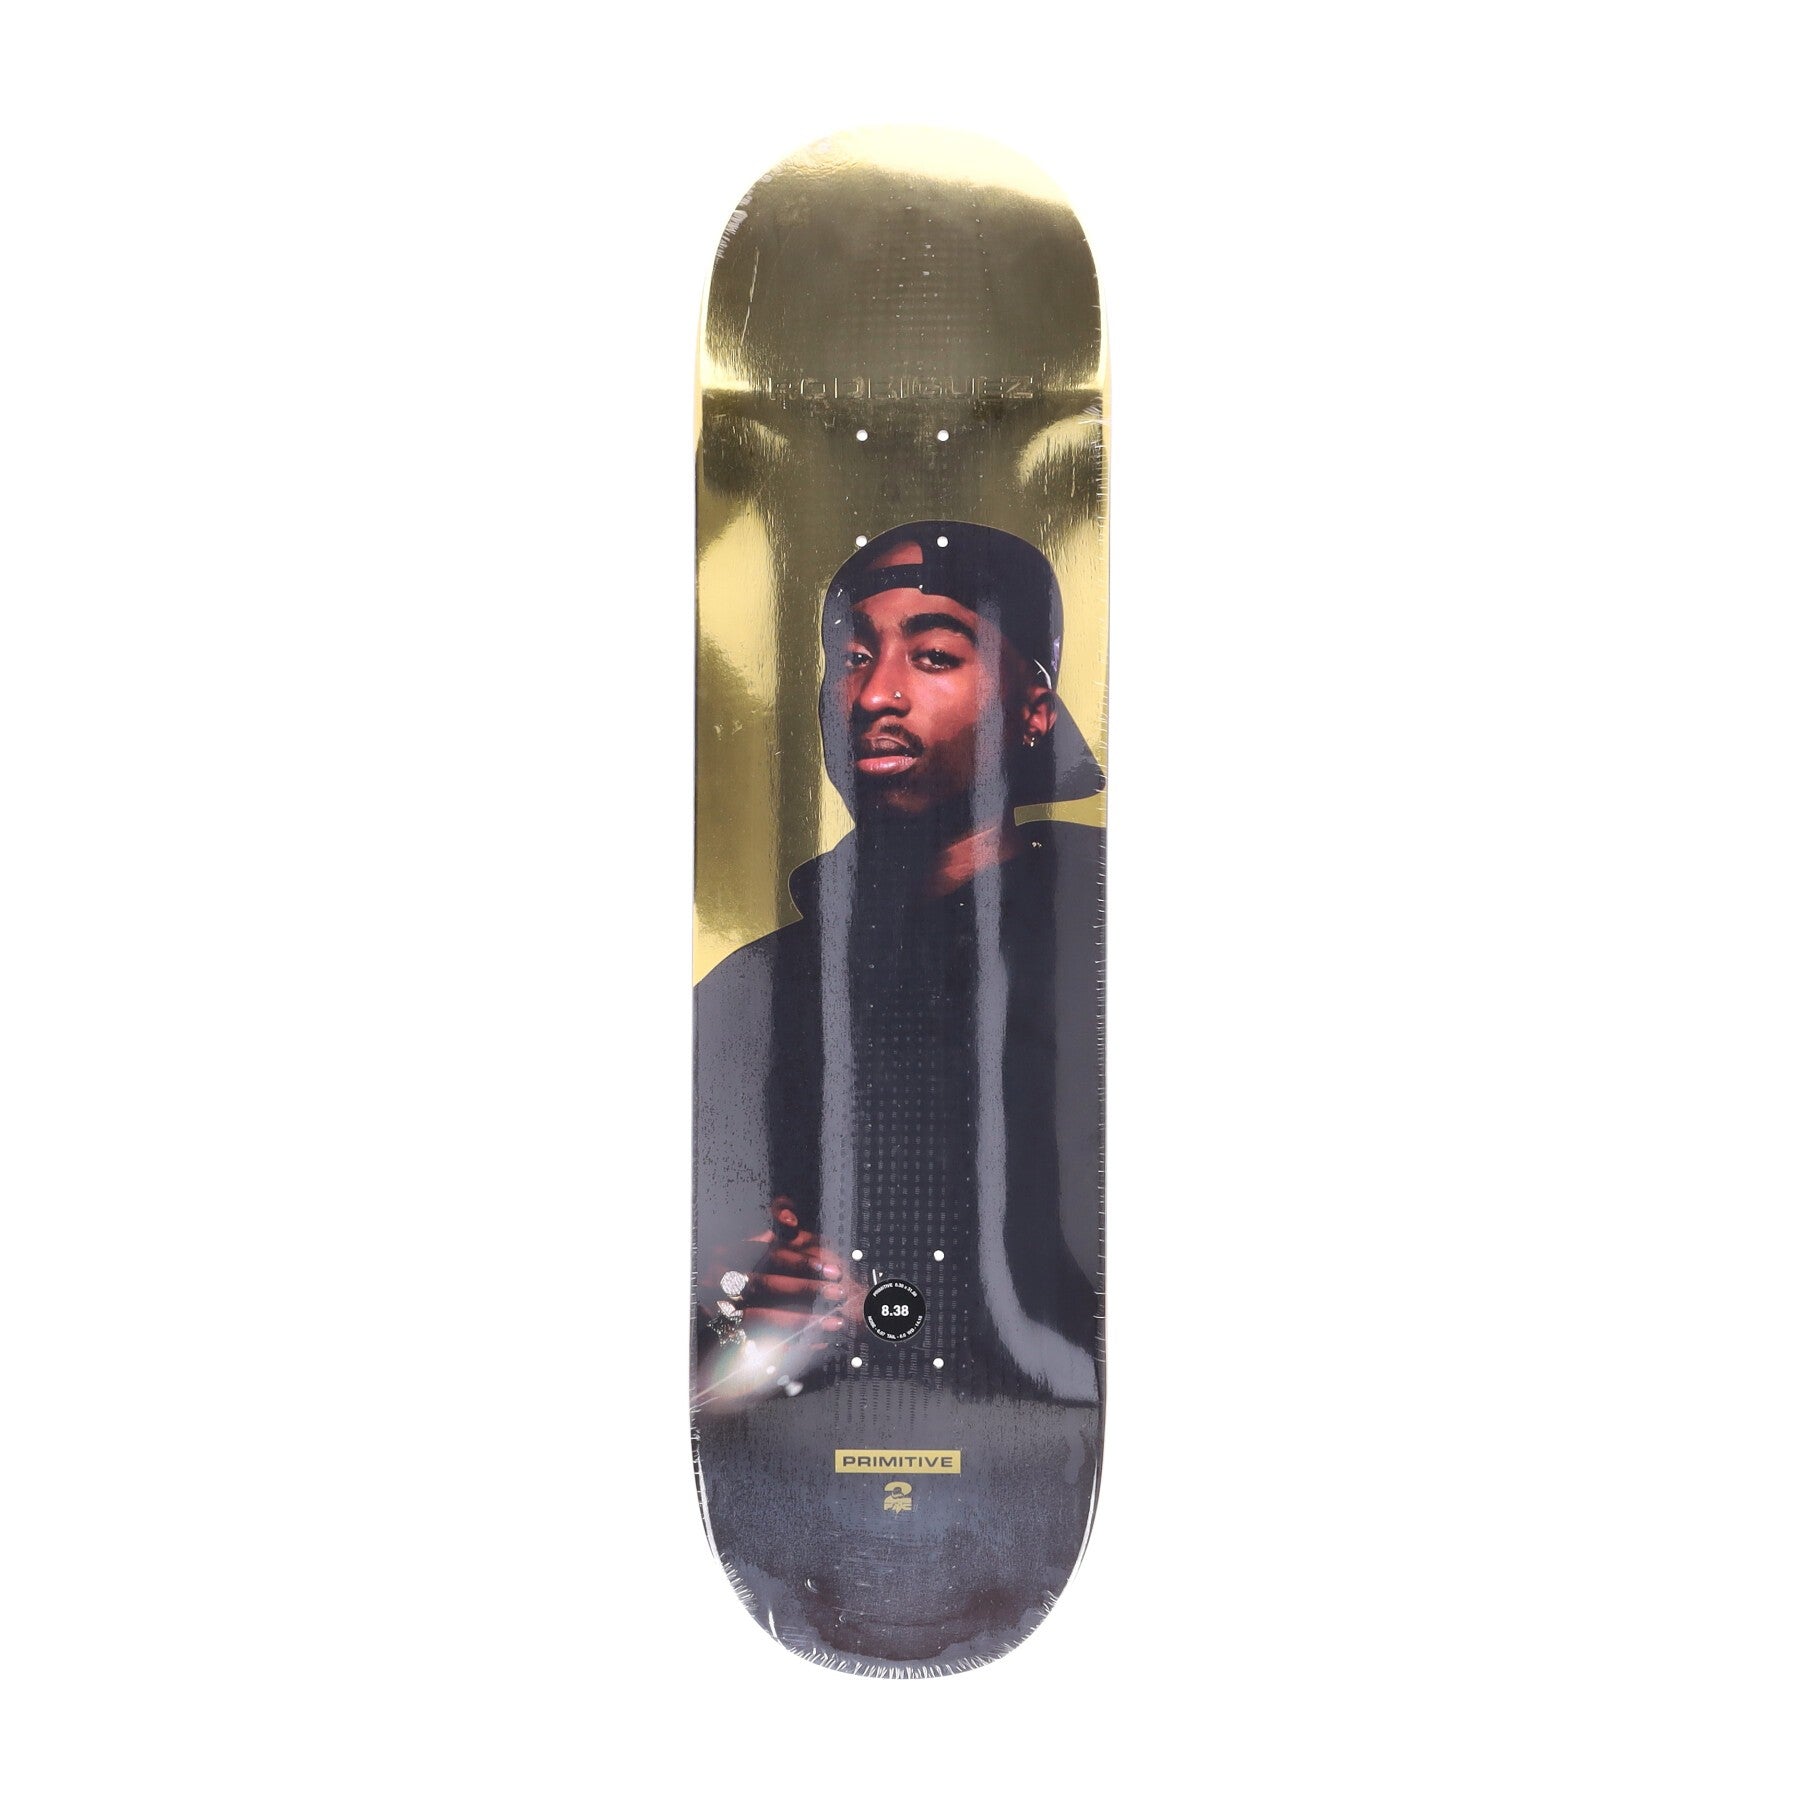 Primitive, Skateboard Tavola Uomo Rodriguez Shine Deck X 2pac, 